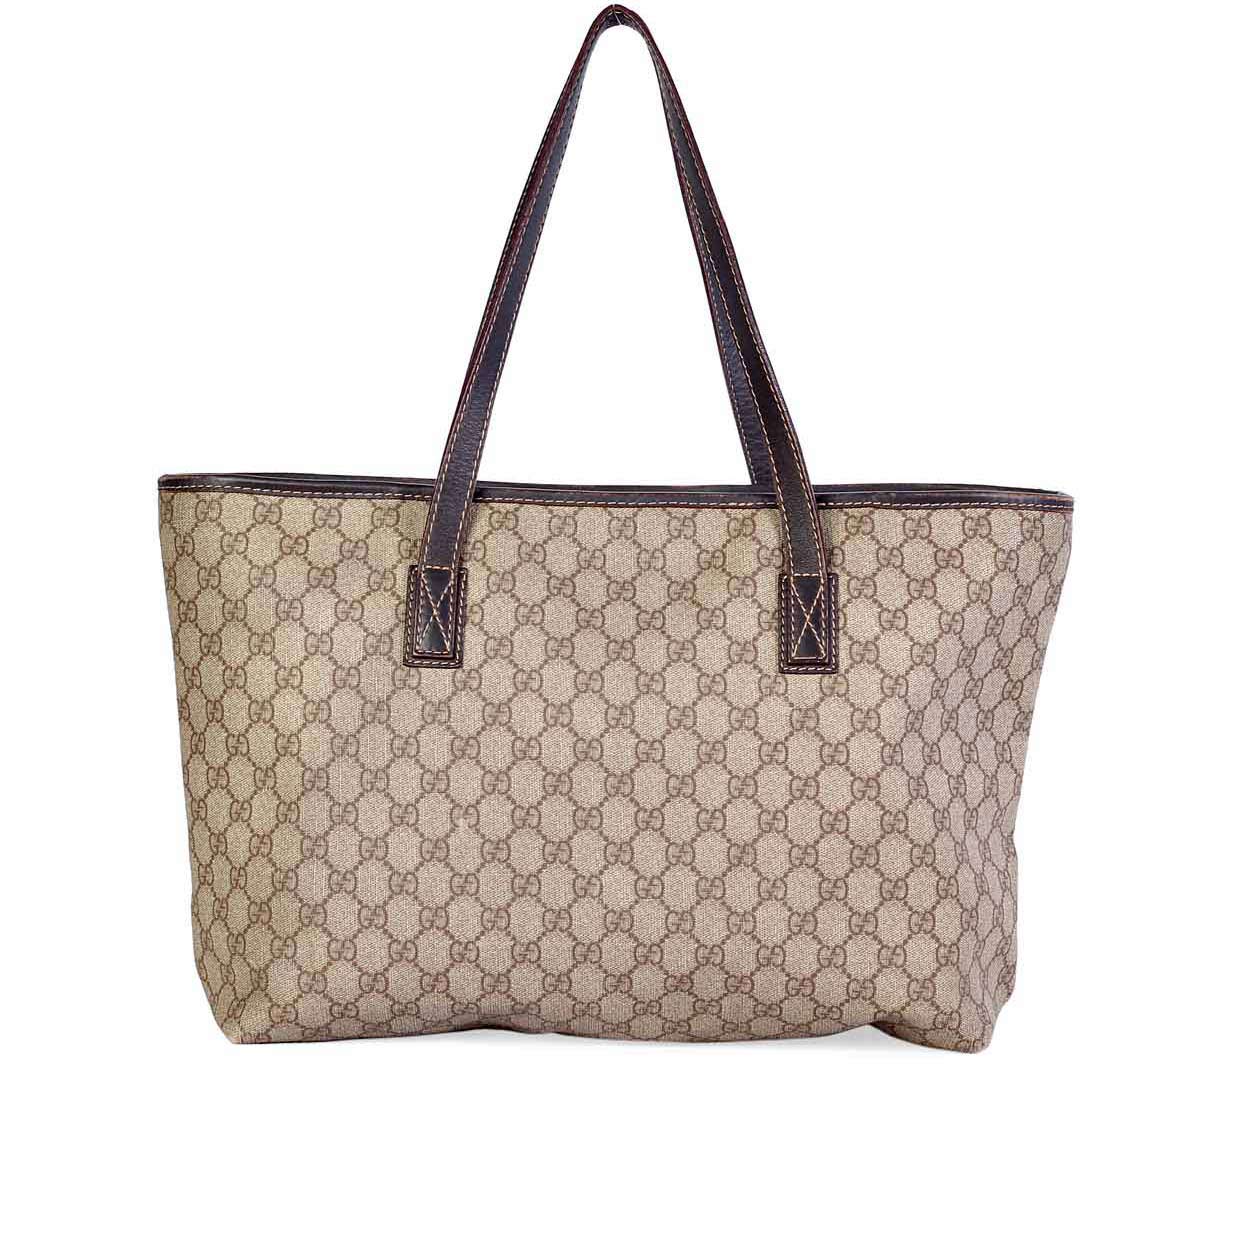 Gucci Tote Handbags On Salesforce | semashow.com